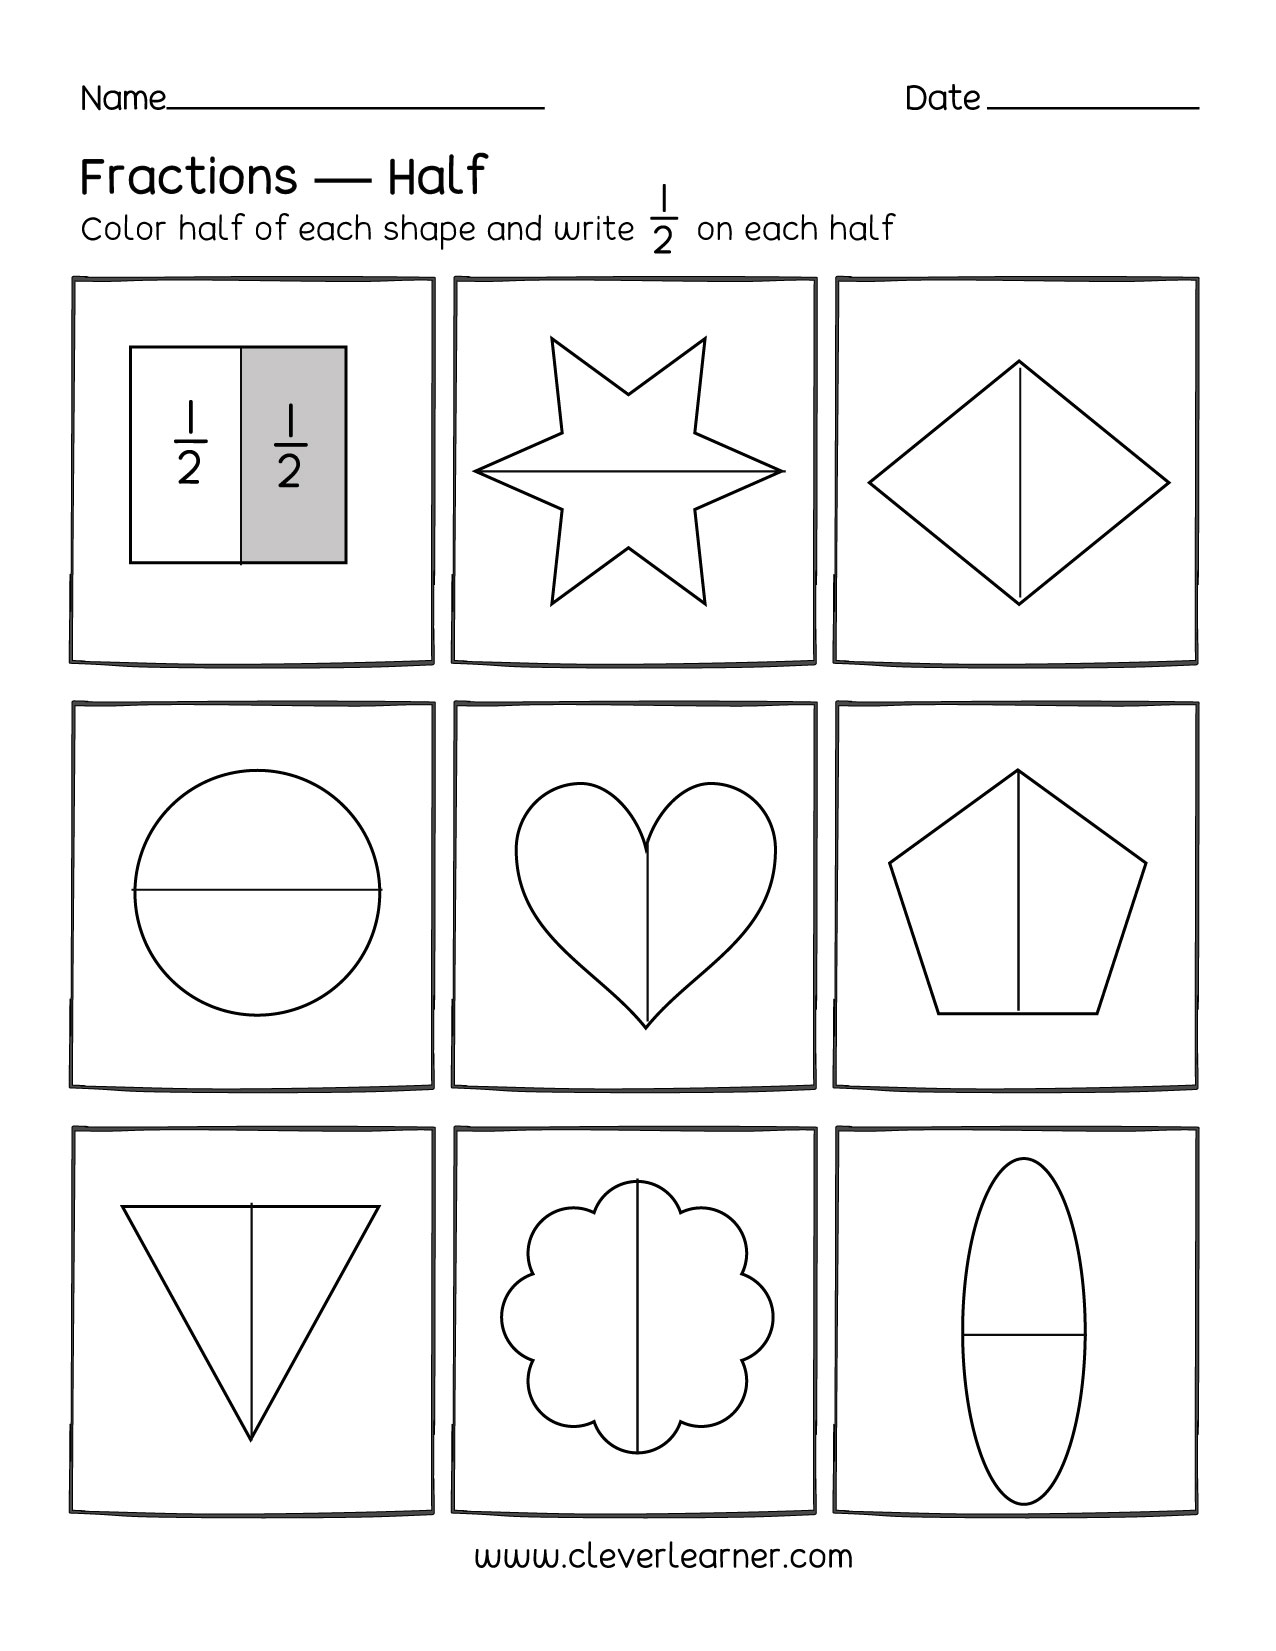 fun-activity-on-fractions-half-1-2-worksheets-for-children